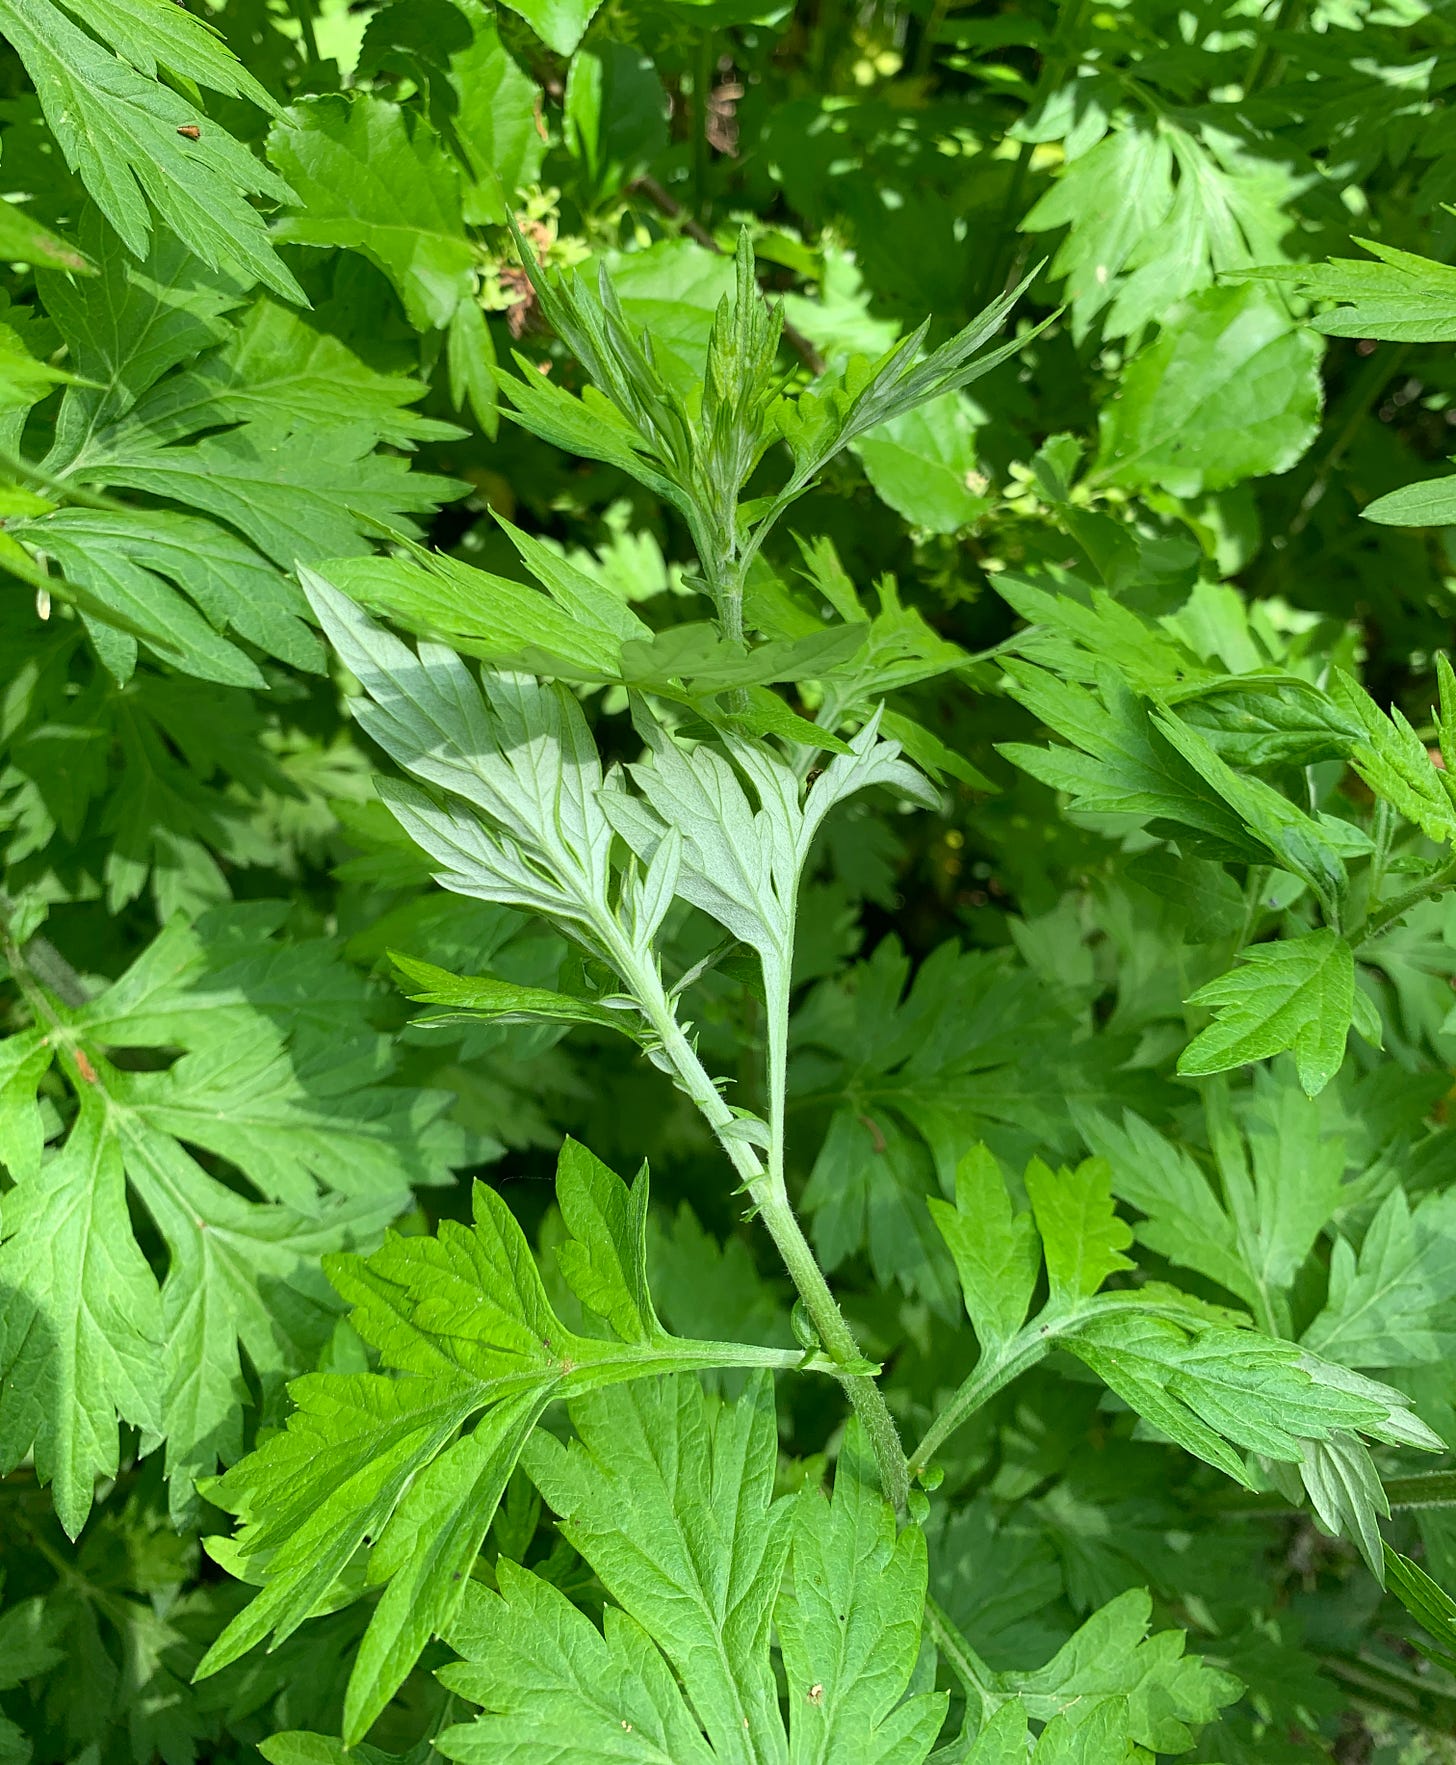 A photograph of mugwort leaves